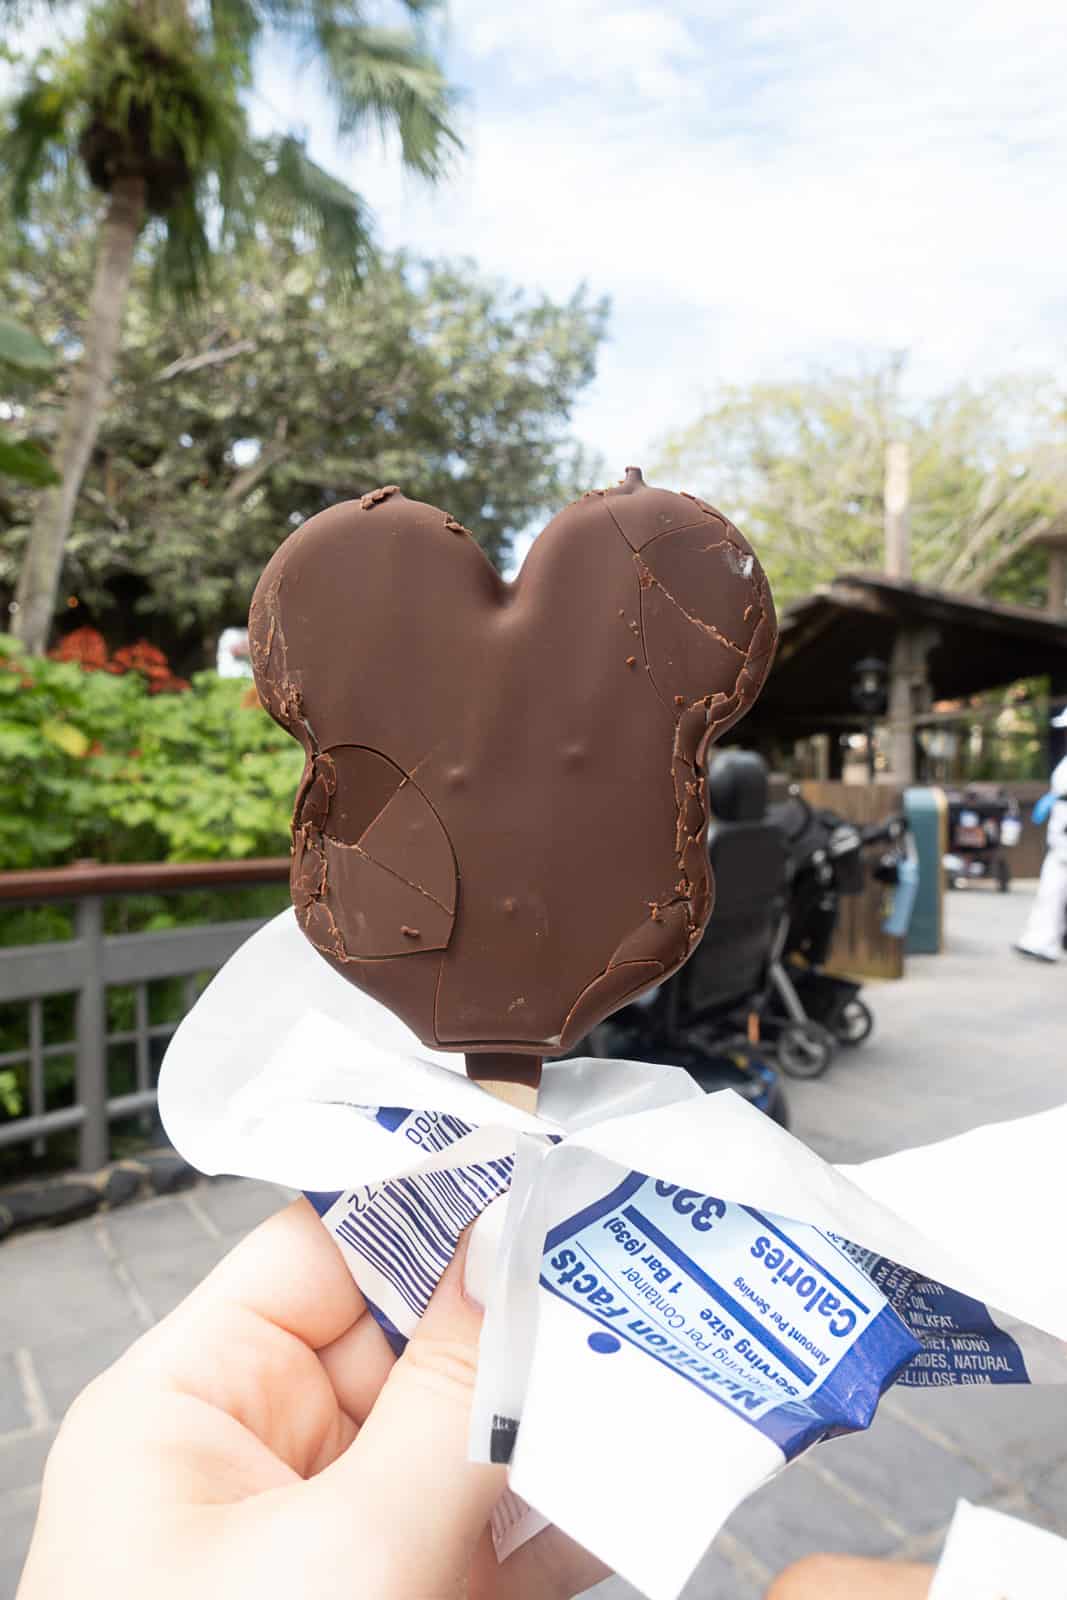 Disney Food Blogger holding Mickey Shaped Ice Cream Treat